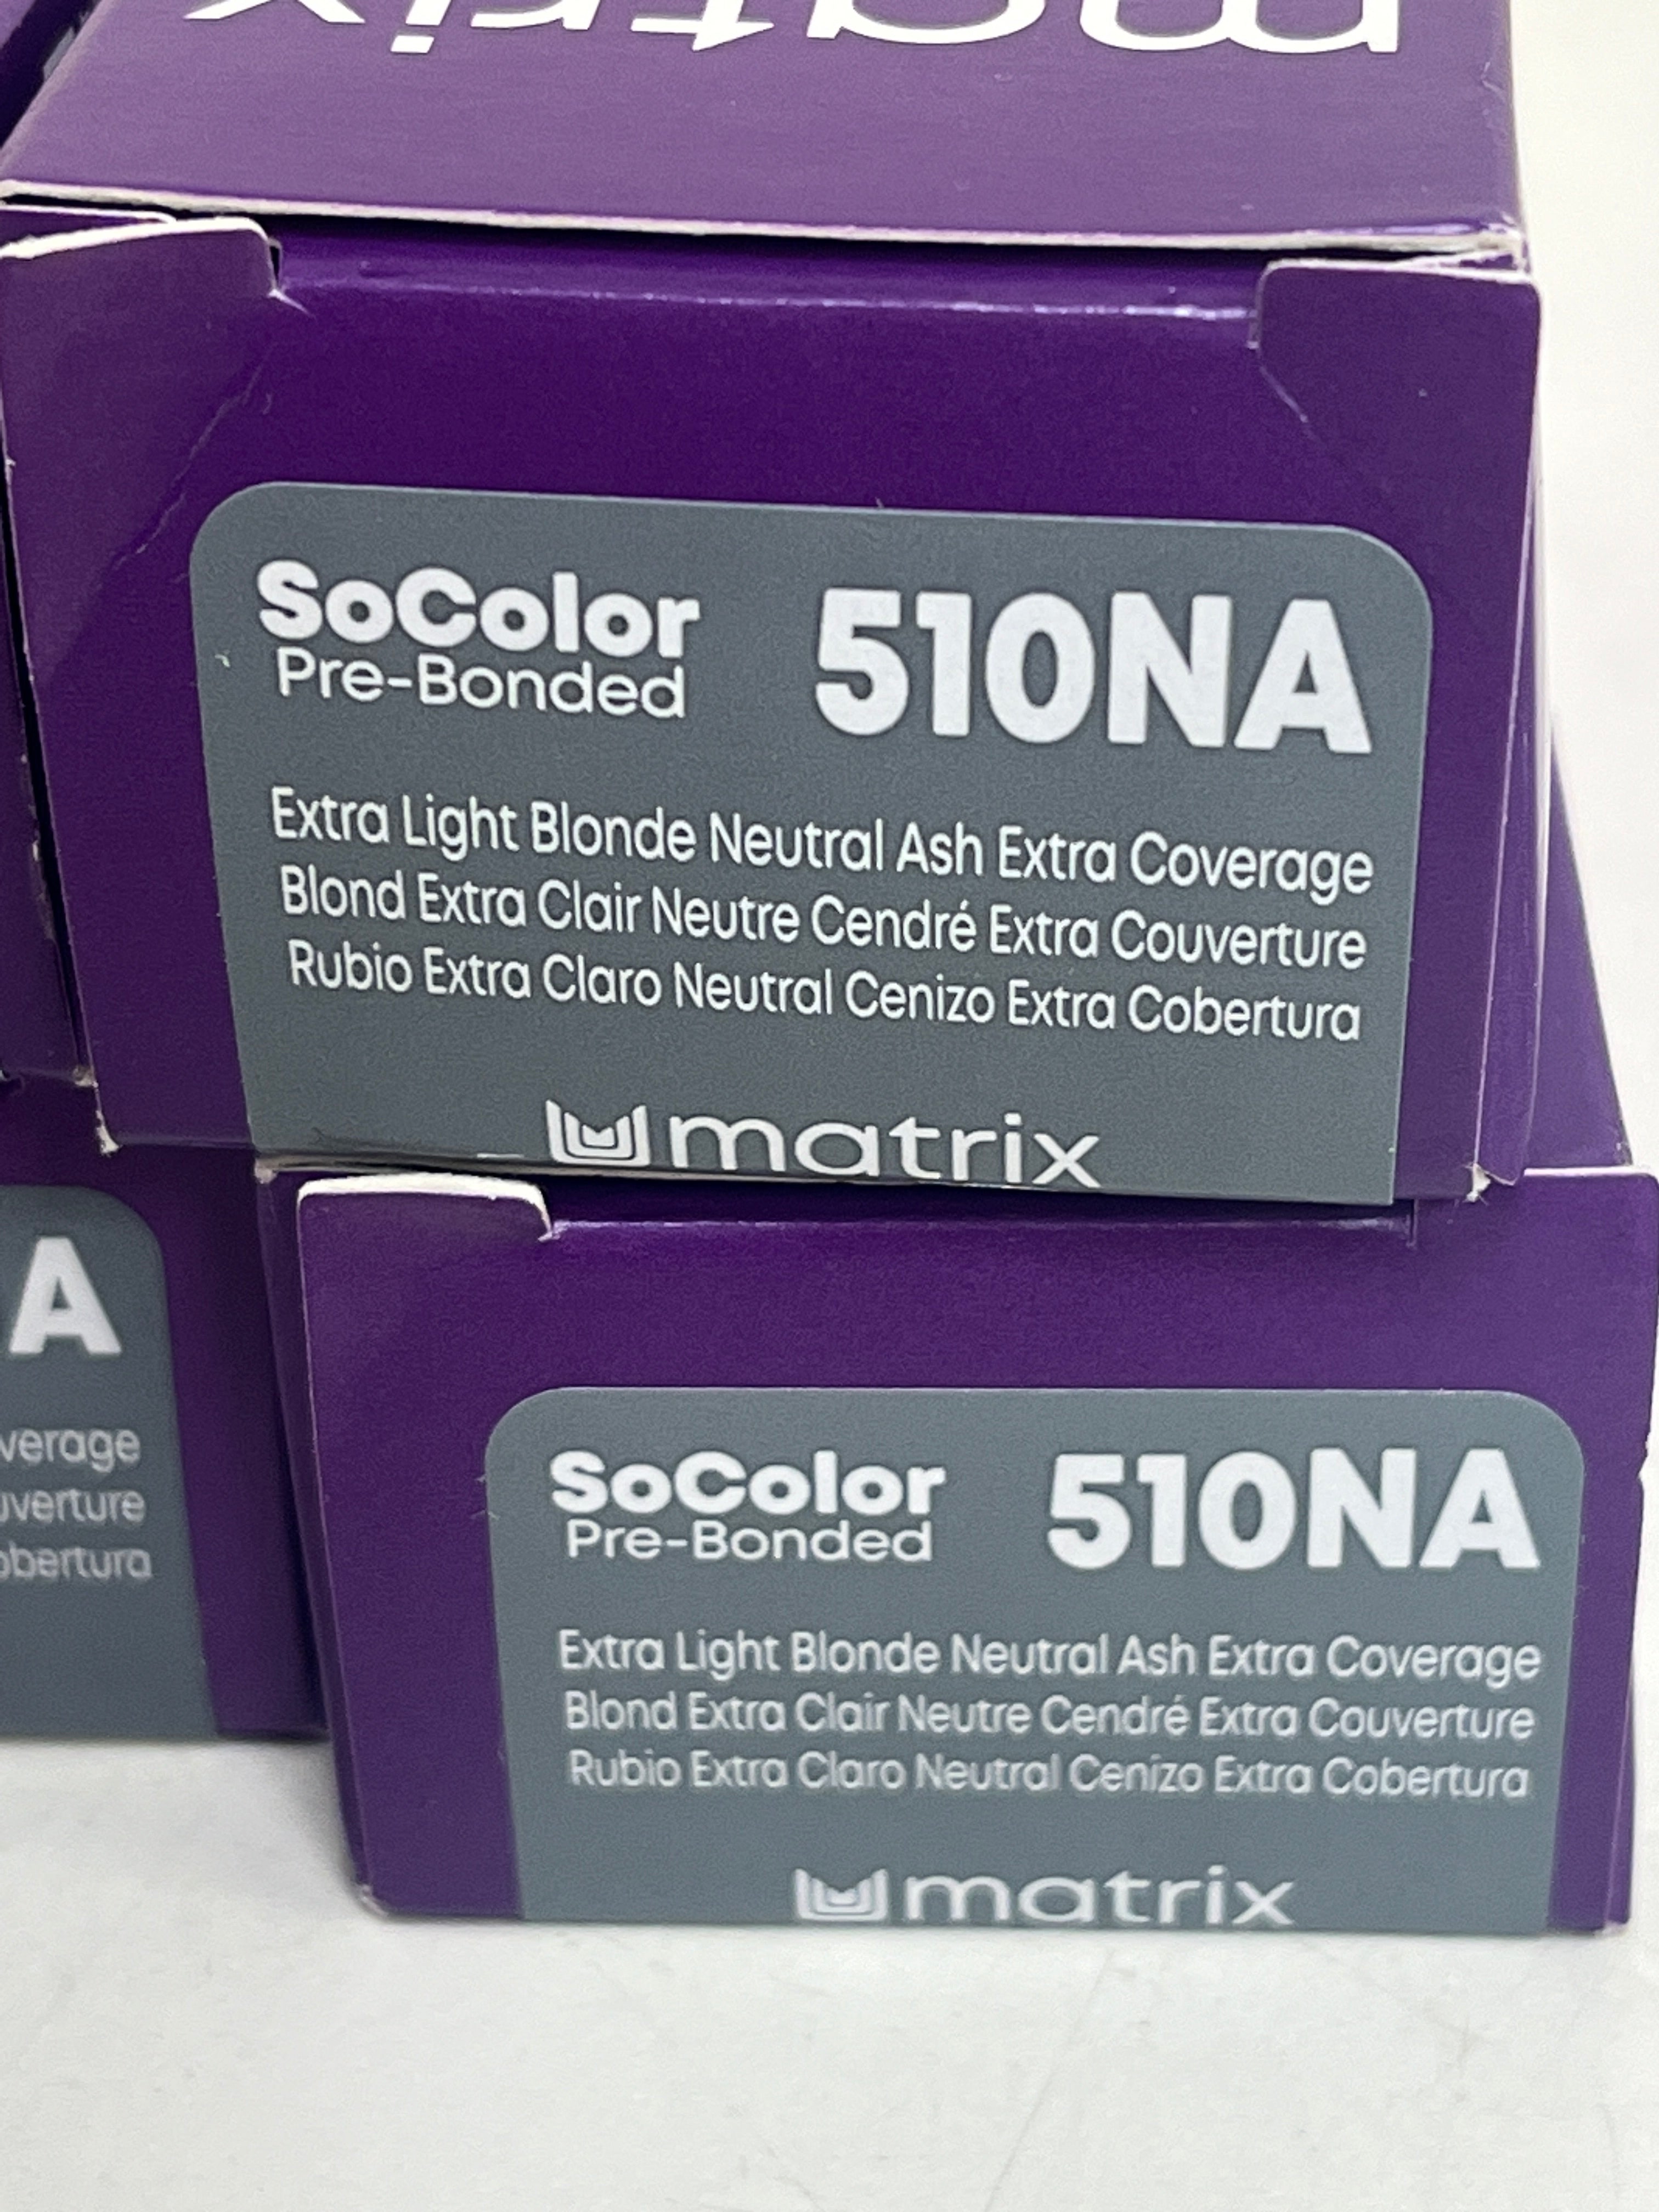 Matrix Socolor Pre Bonded 510NA Extra Light Blonde Neutral Ash Permanent Color